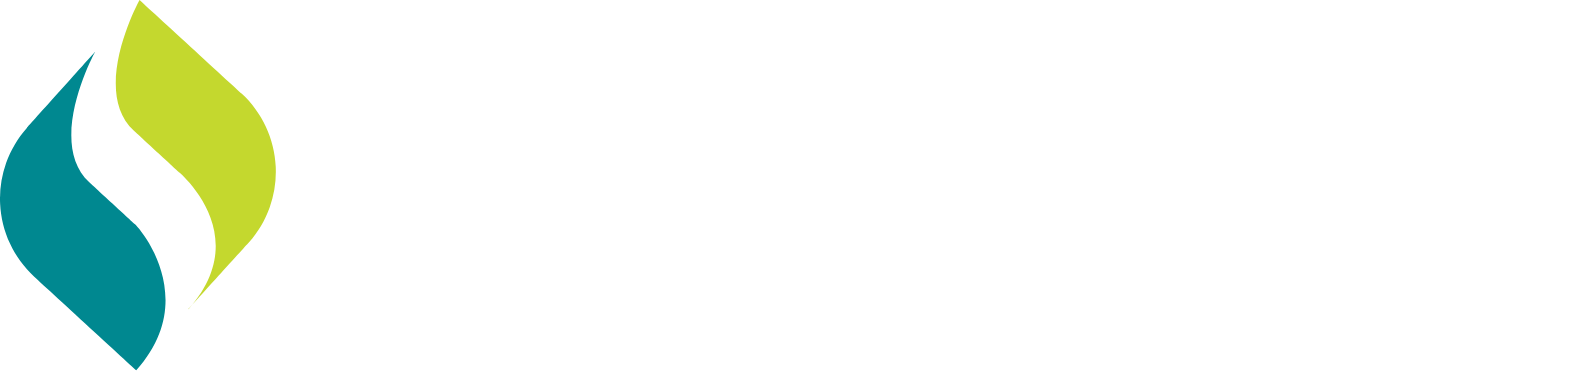 Signify Health logo large for dark backgrounds (transparent PNG)